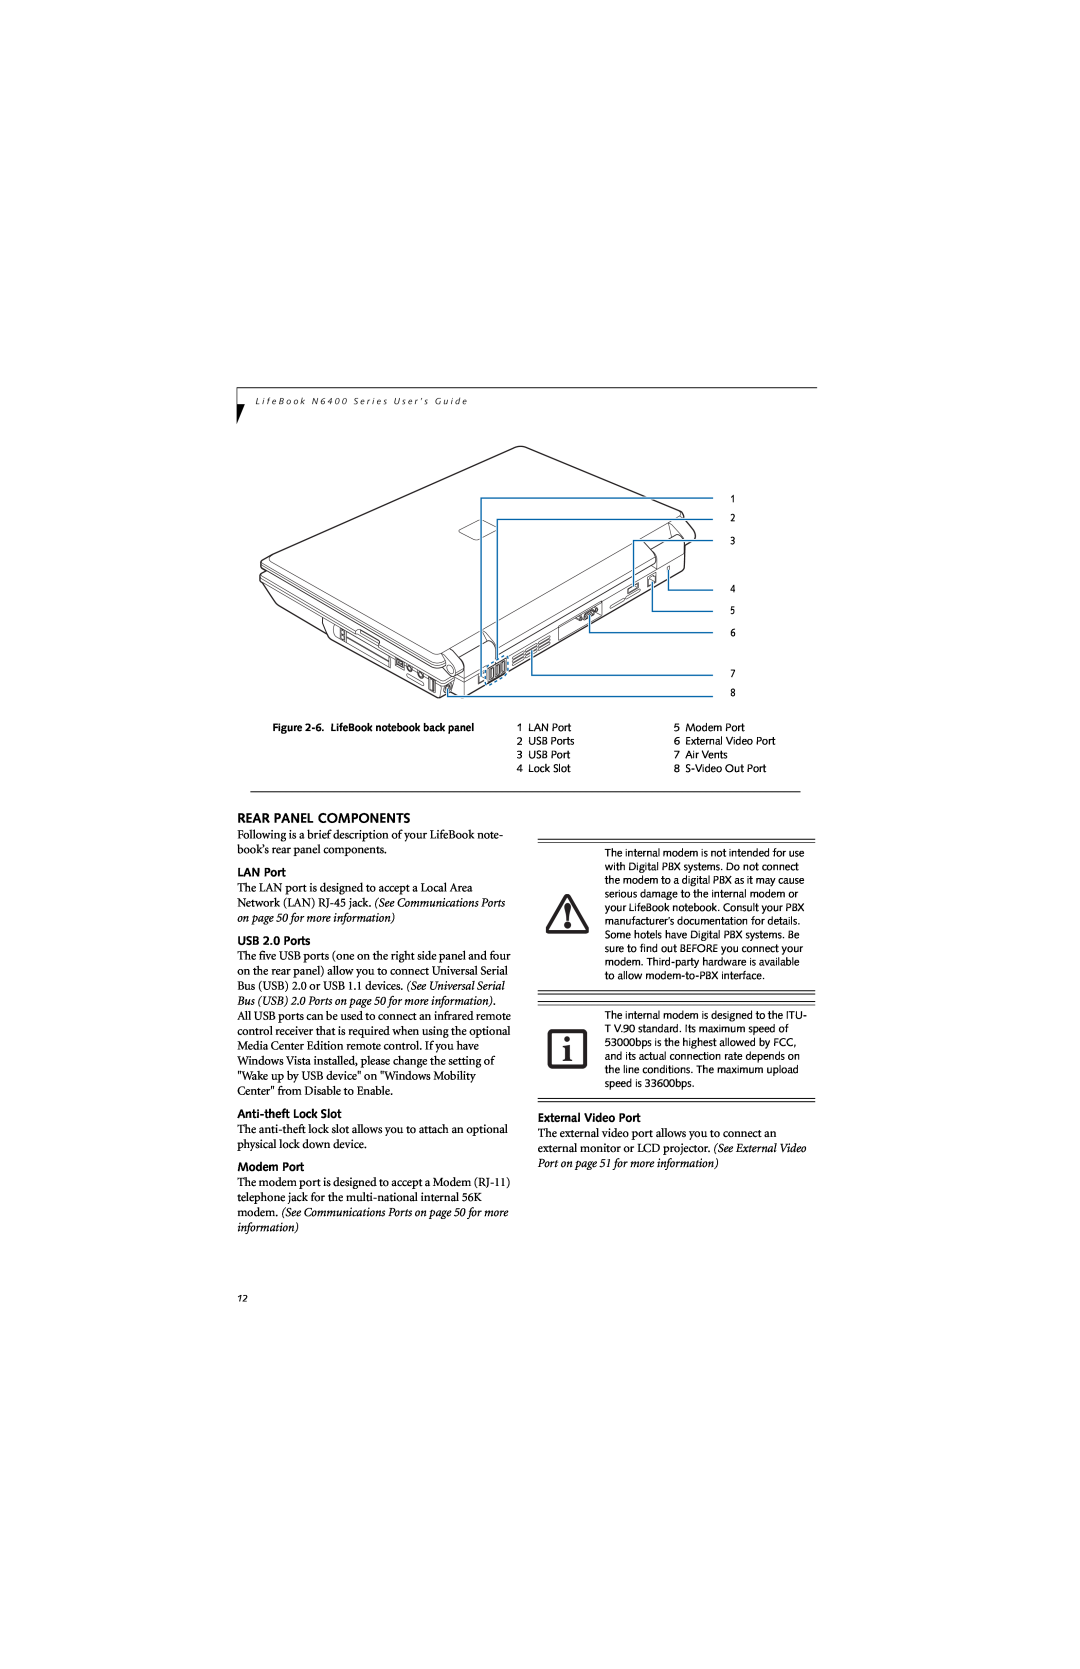 Fujitsu N6420 manual Rear Panel Components, LAN Port, USB 2.0 Ports, Anti-theft Lock Slot, Modem Port, External Video Port 